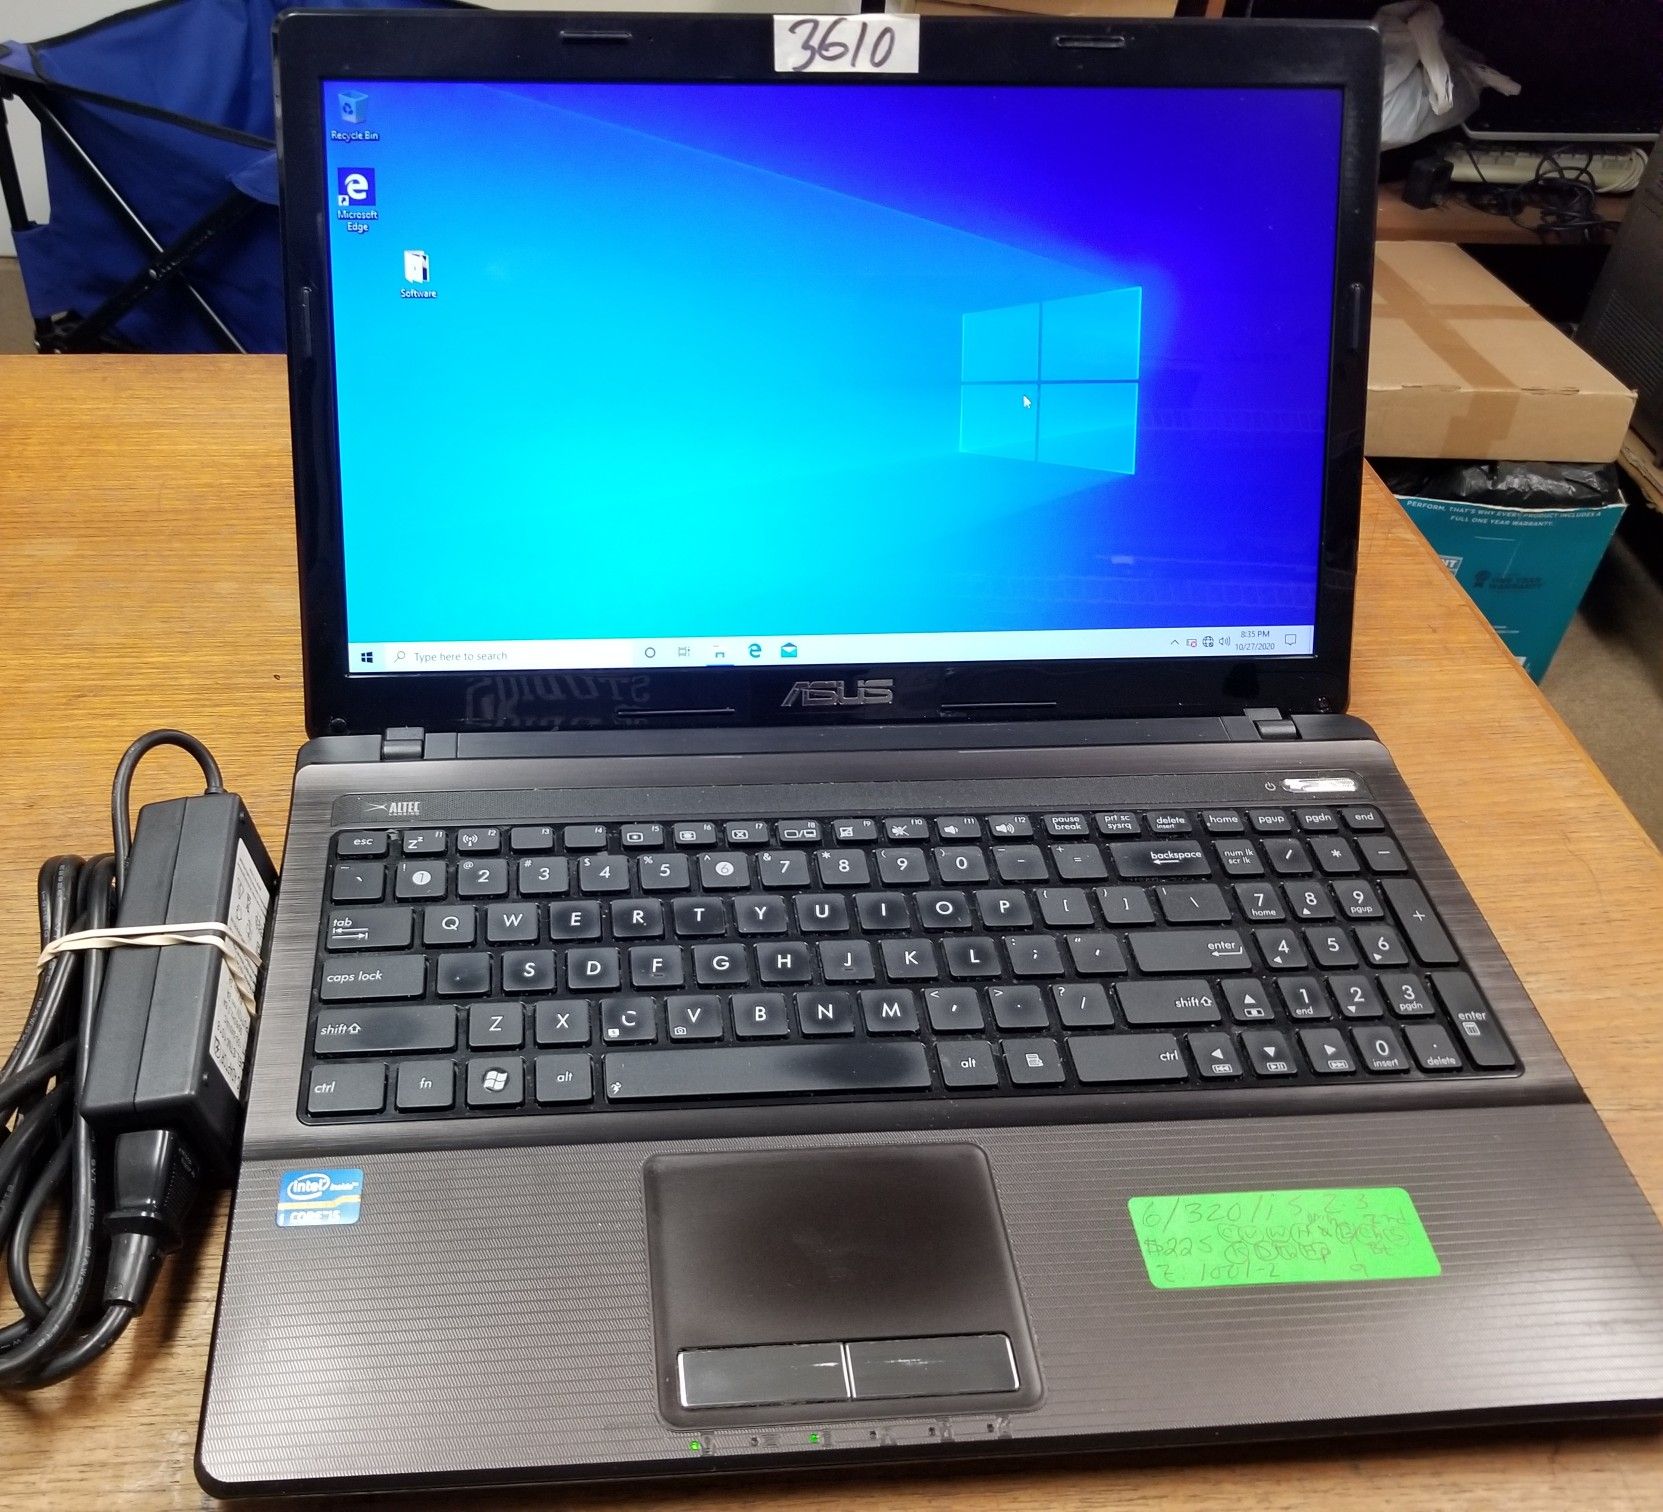 Fixed Price: Asus K53E 15.6" Laptop Core i5 6gb Ram 320gb Hdd Windows 10 Webcam HDMI #3610